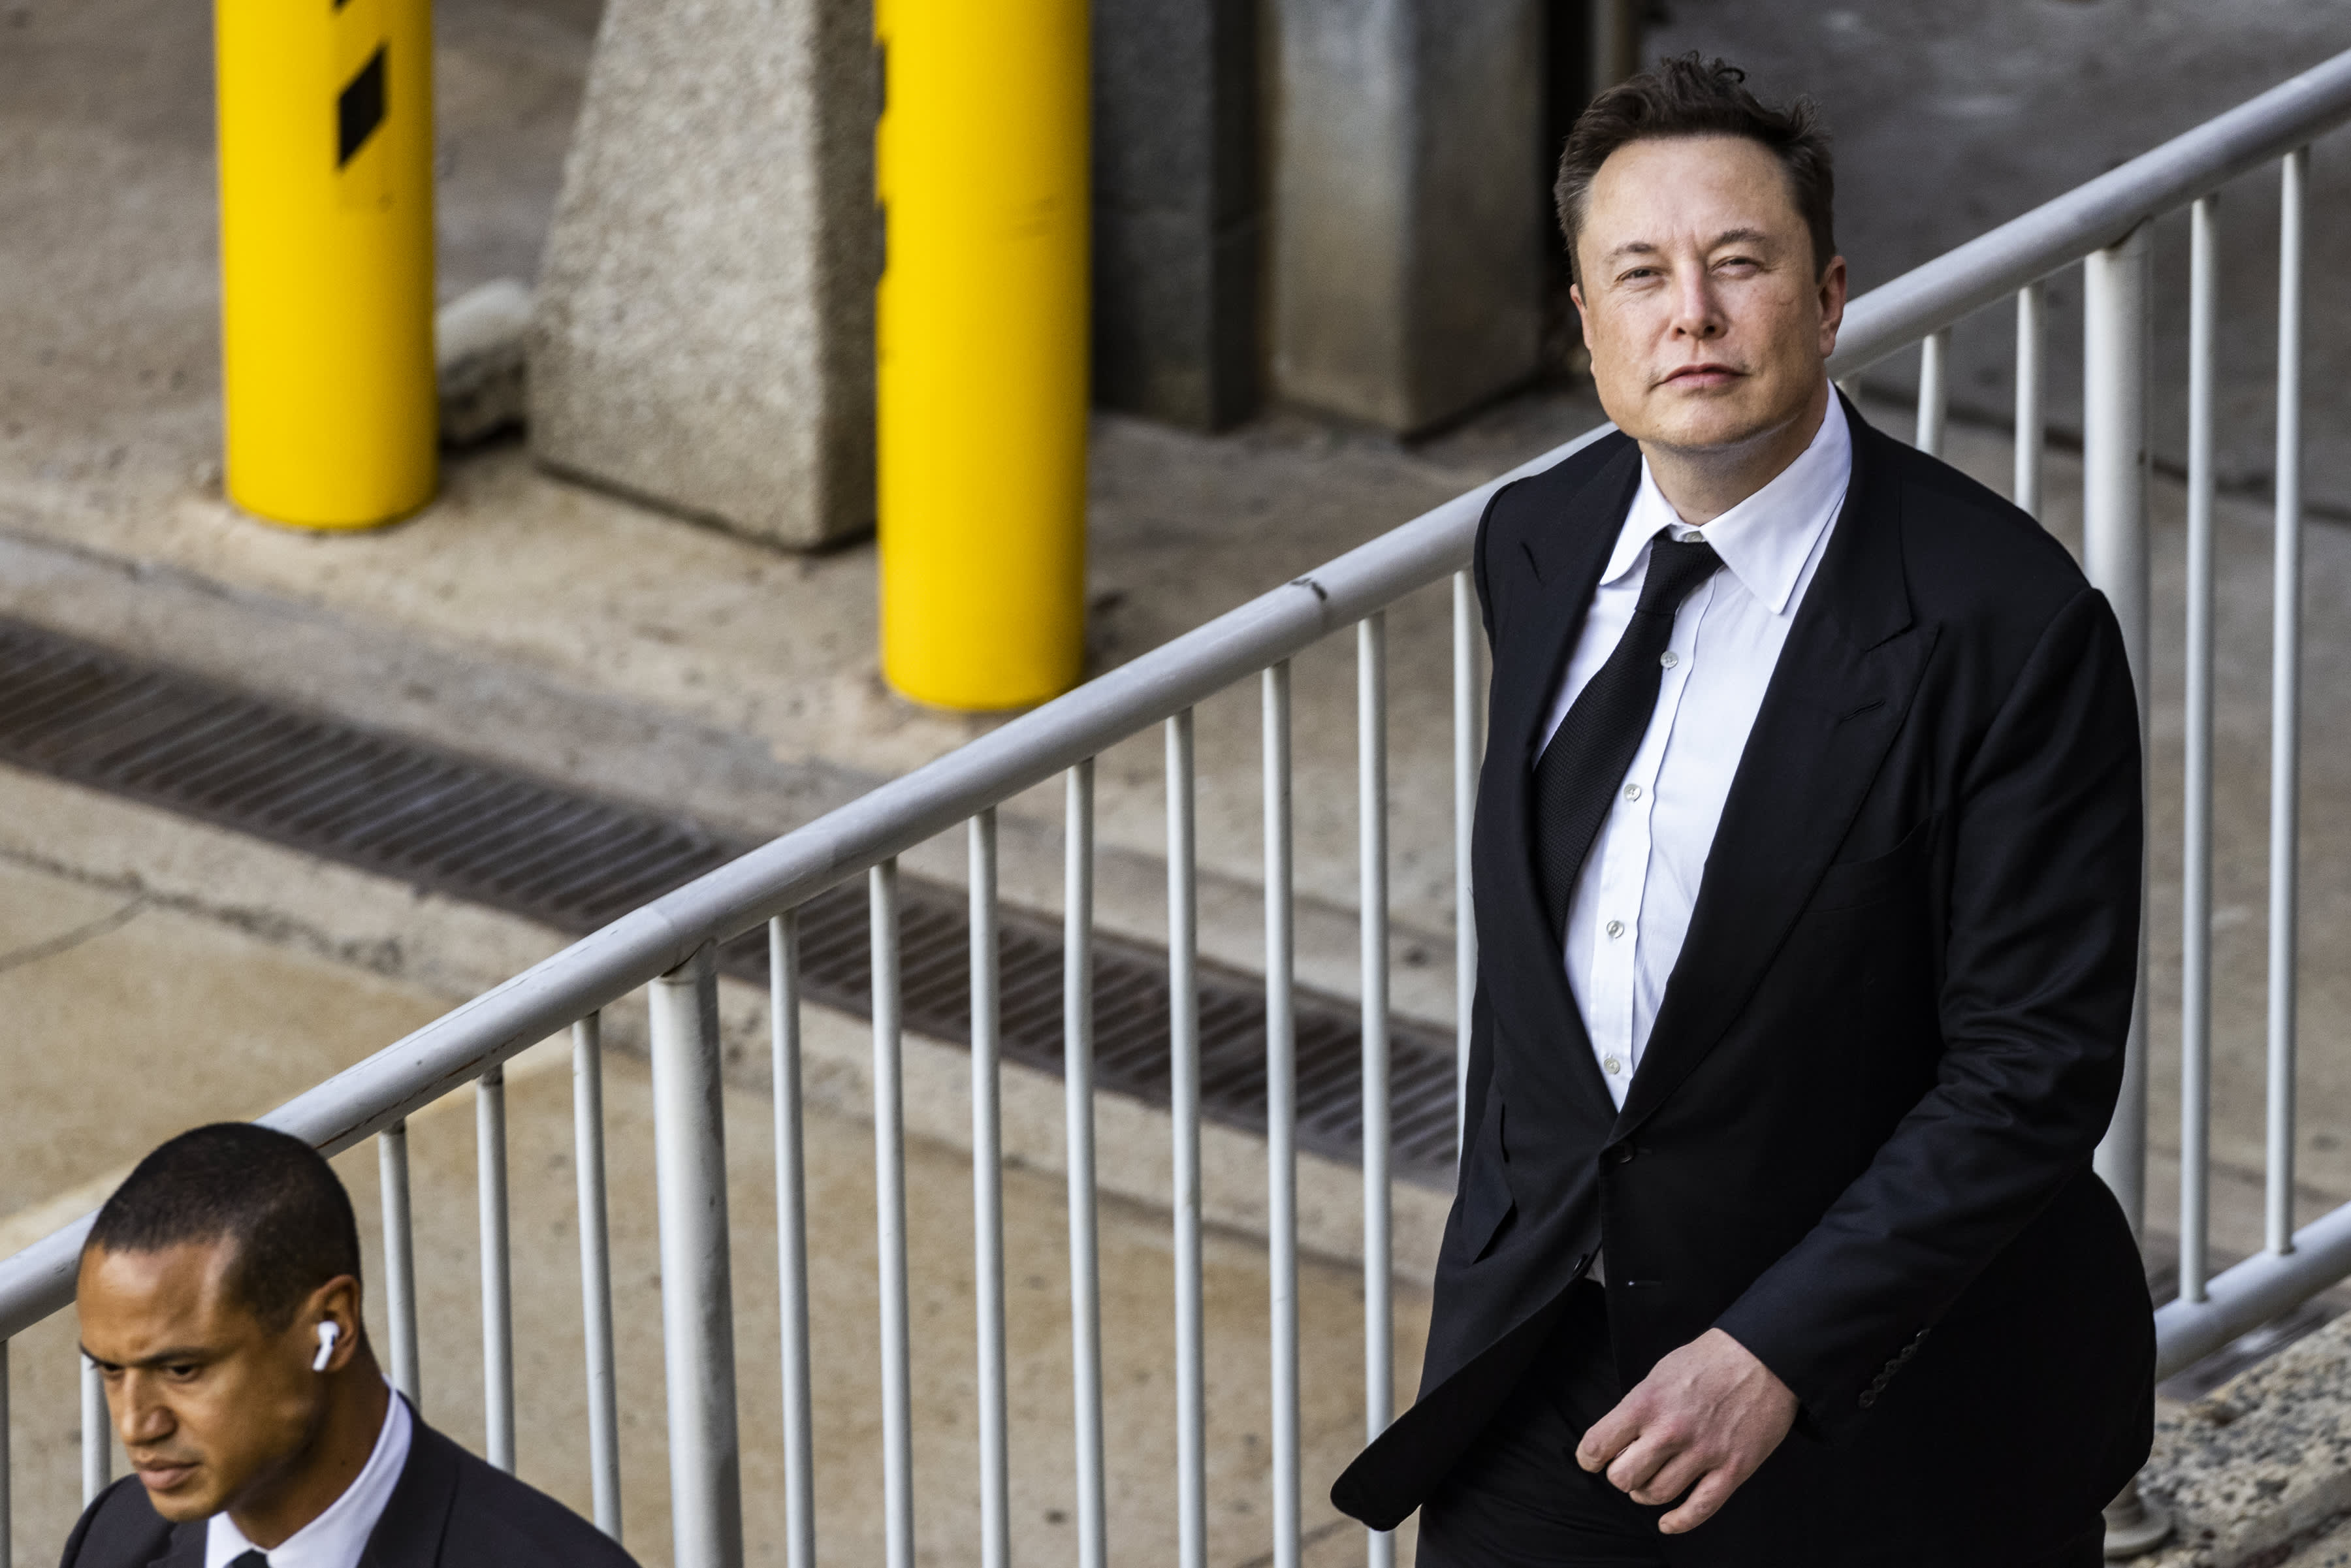 Elon Musk snipes at Apple twice on Tesla earnings call